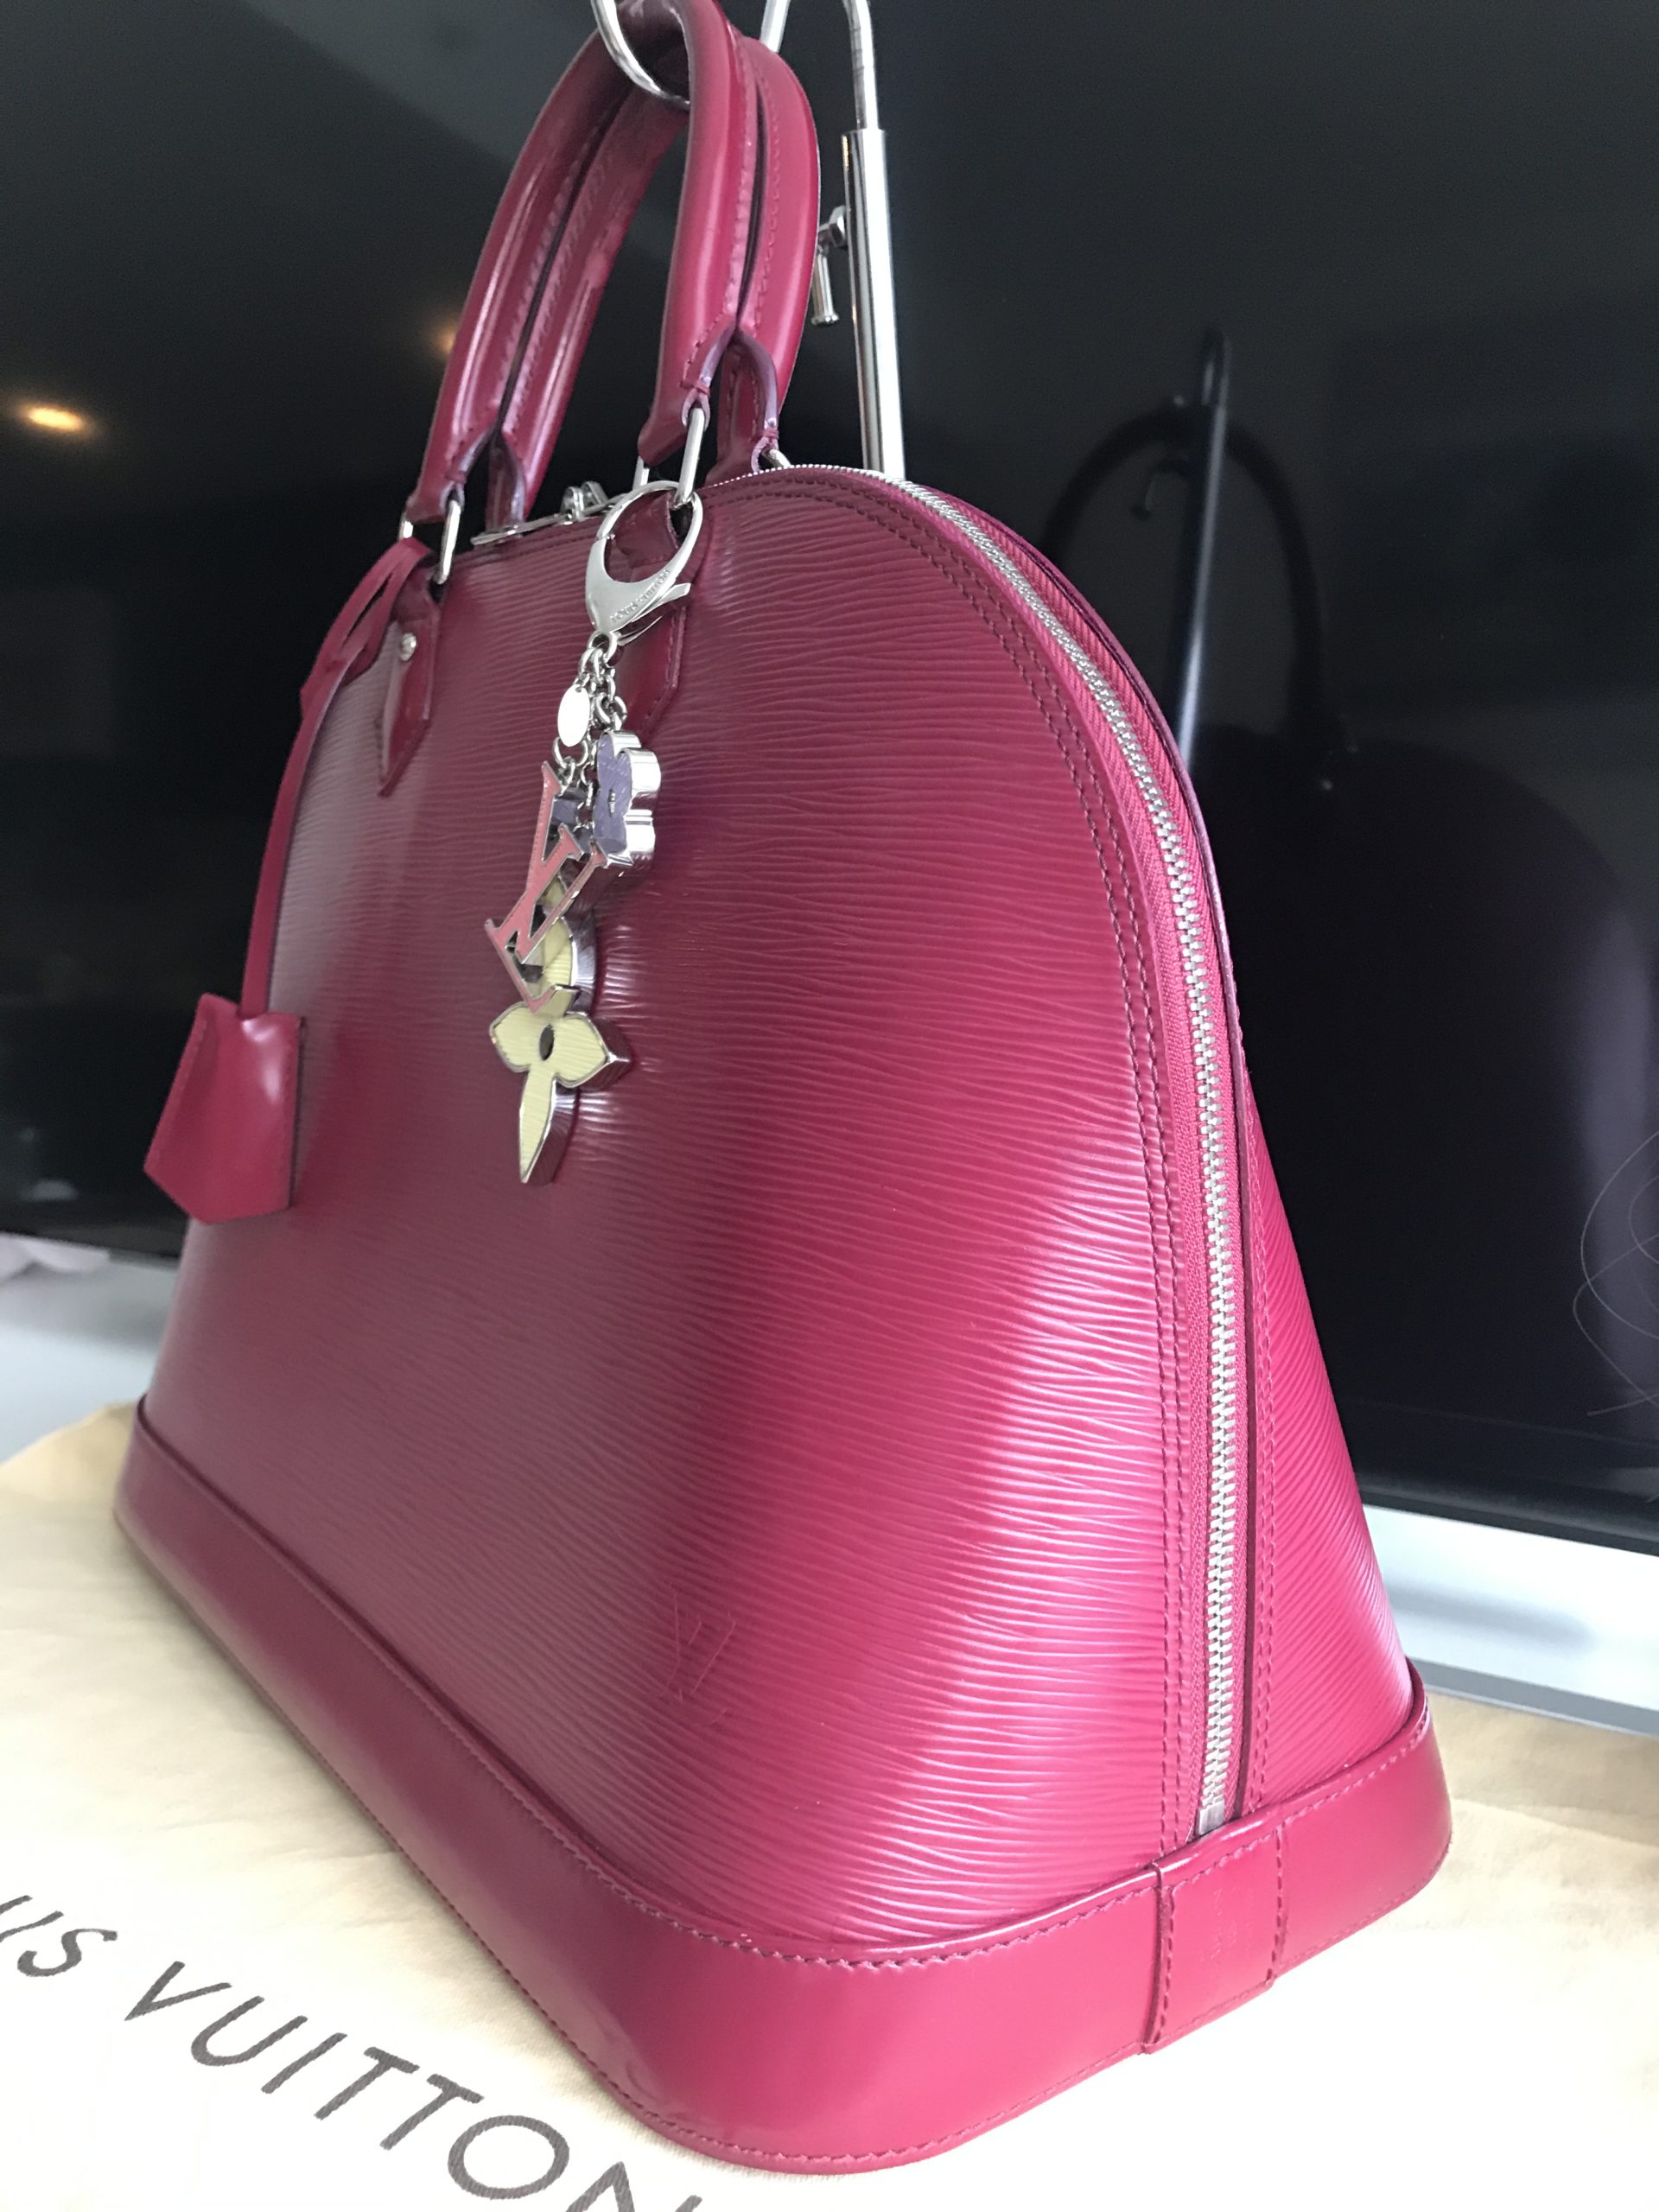 LOUIS VUITTON Purple Epi Leather GM Alma Handbag Purse W/ Dustbag Lock Keys